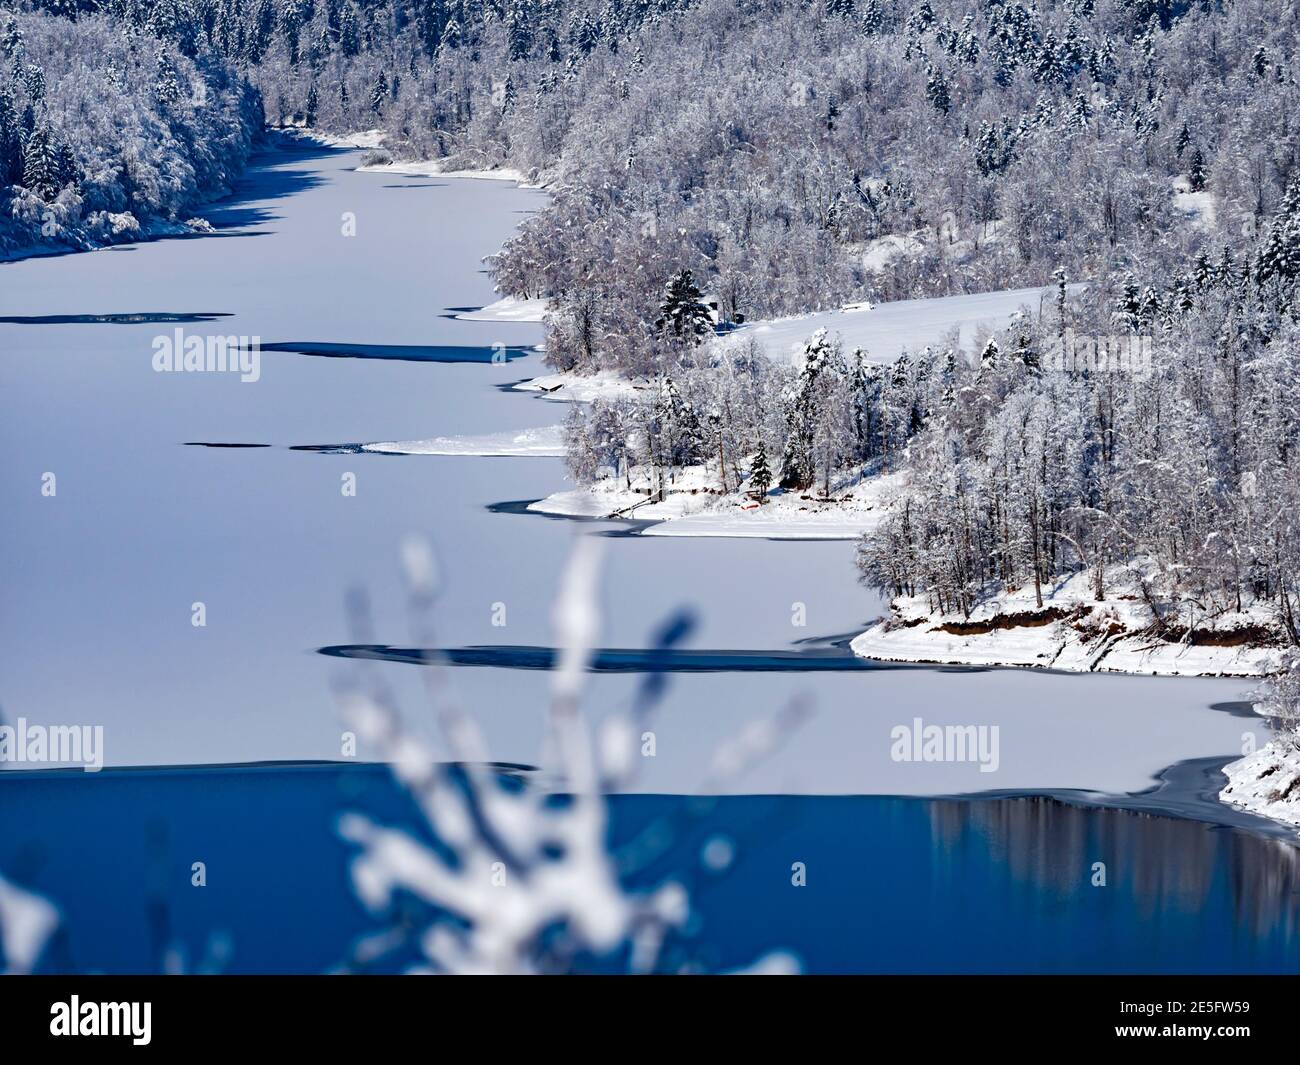 Winter scenery scenic with snow cover Lokve lake Lokvarsko jezero in Croatia Europe partly frozen water suface Stock Photo